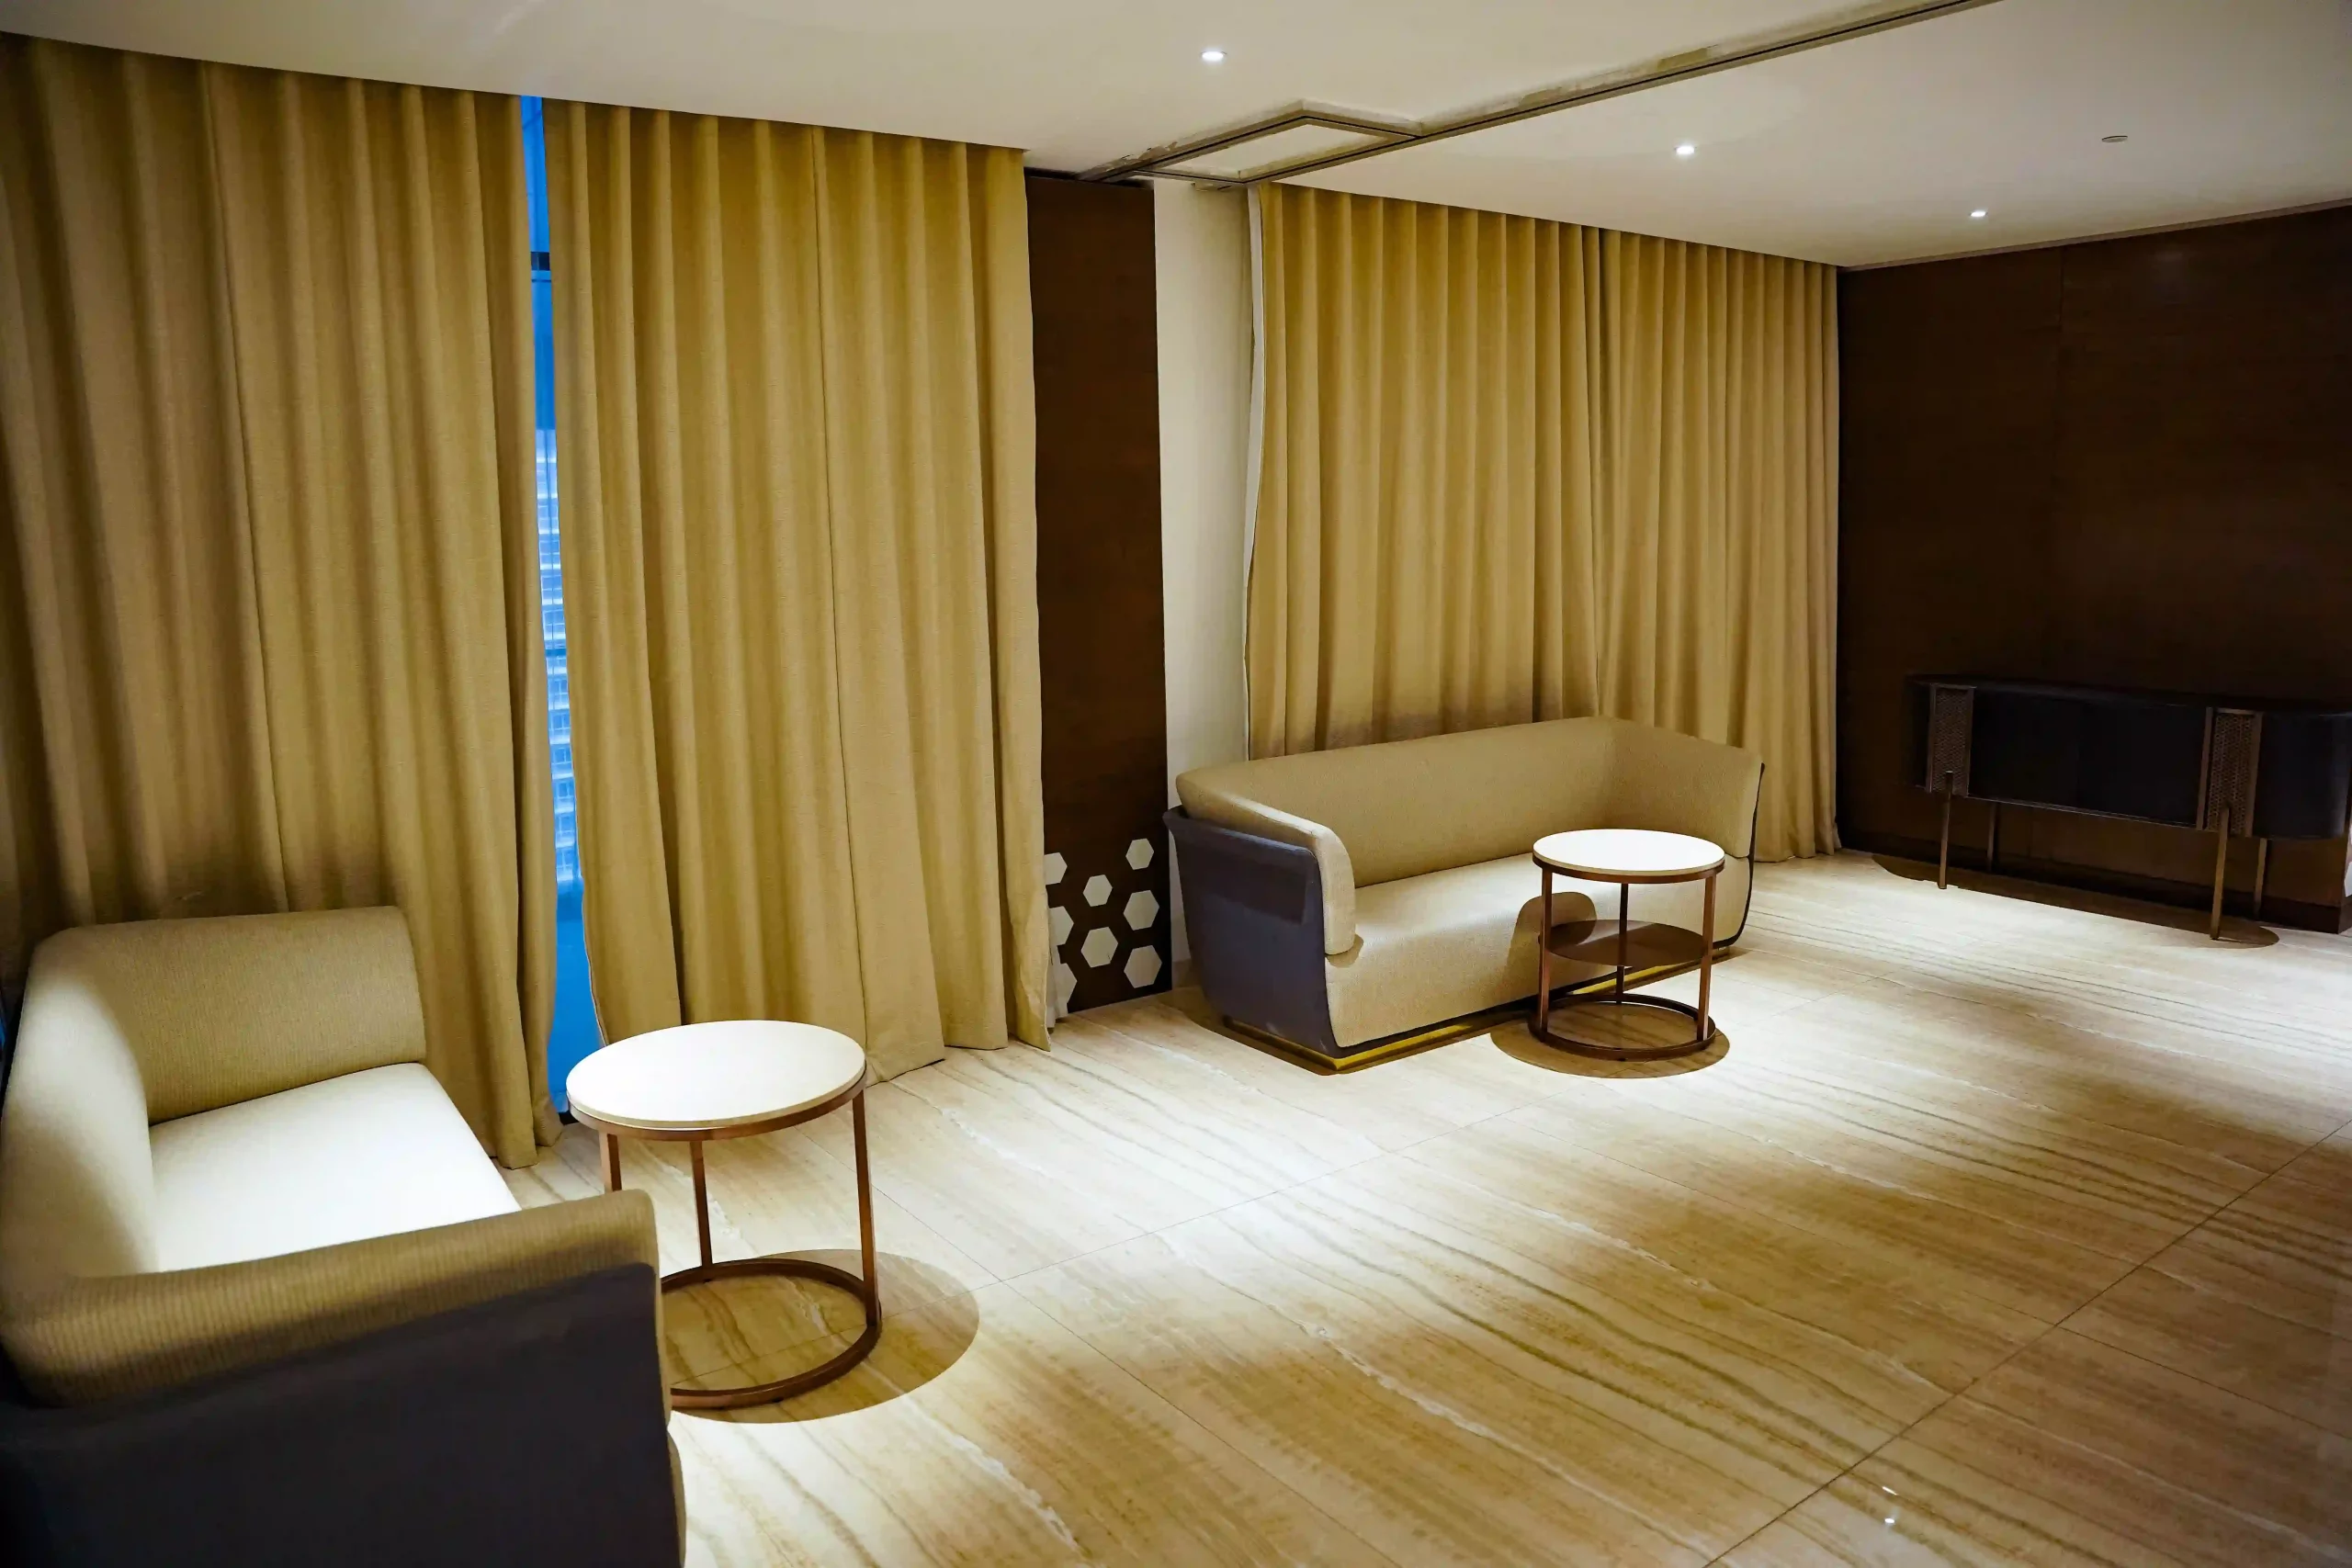 Boradroom at Ramee Dream Hotel-5 Star Hotel in Dubai Downtown DUbai -